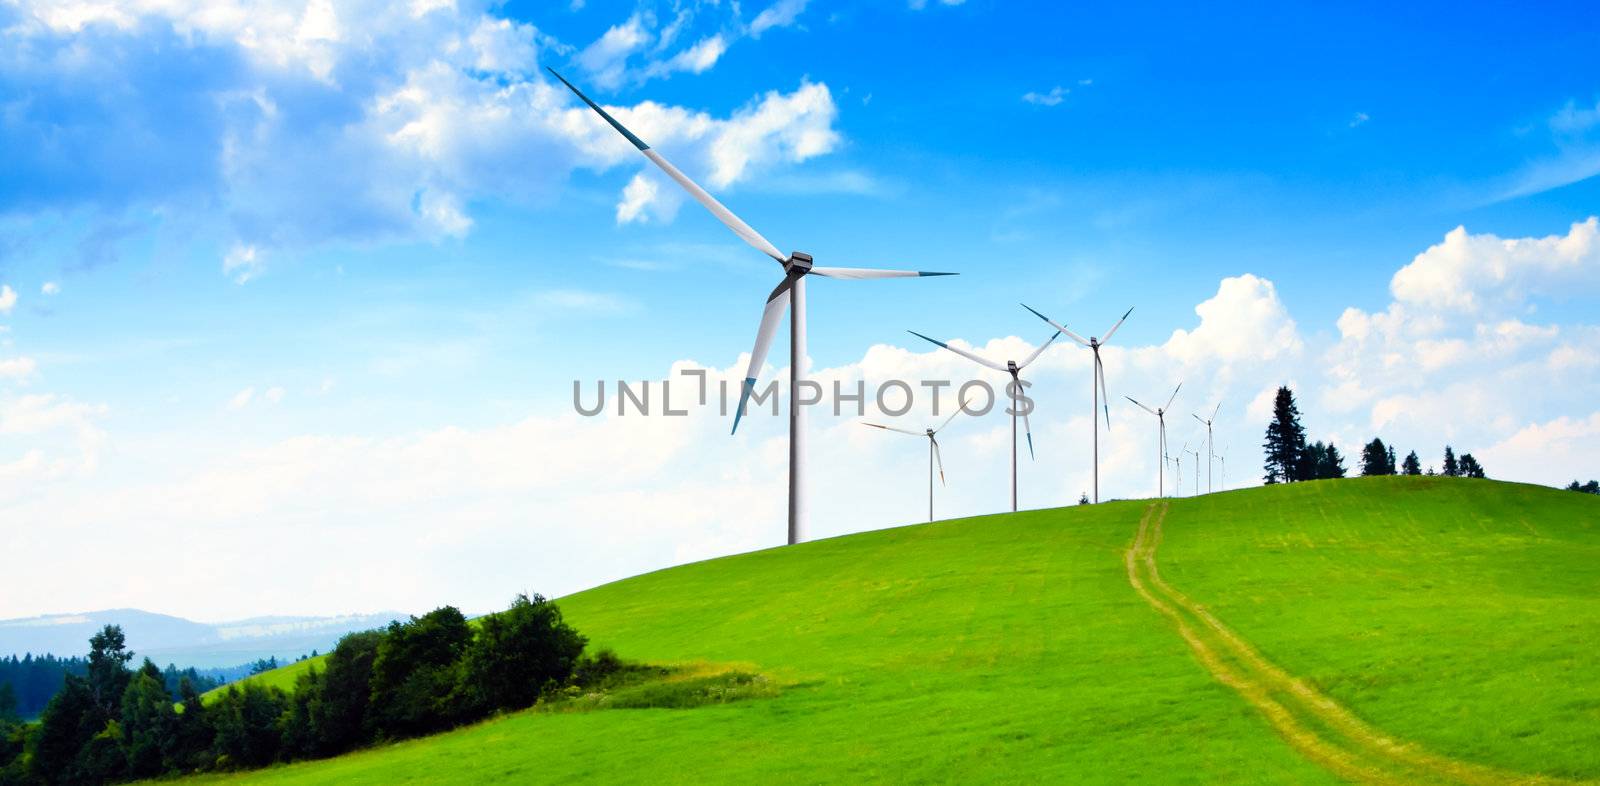 Wind turbines panorama